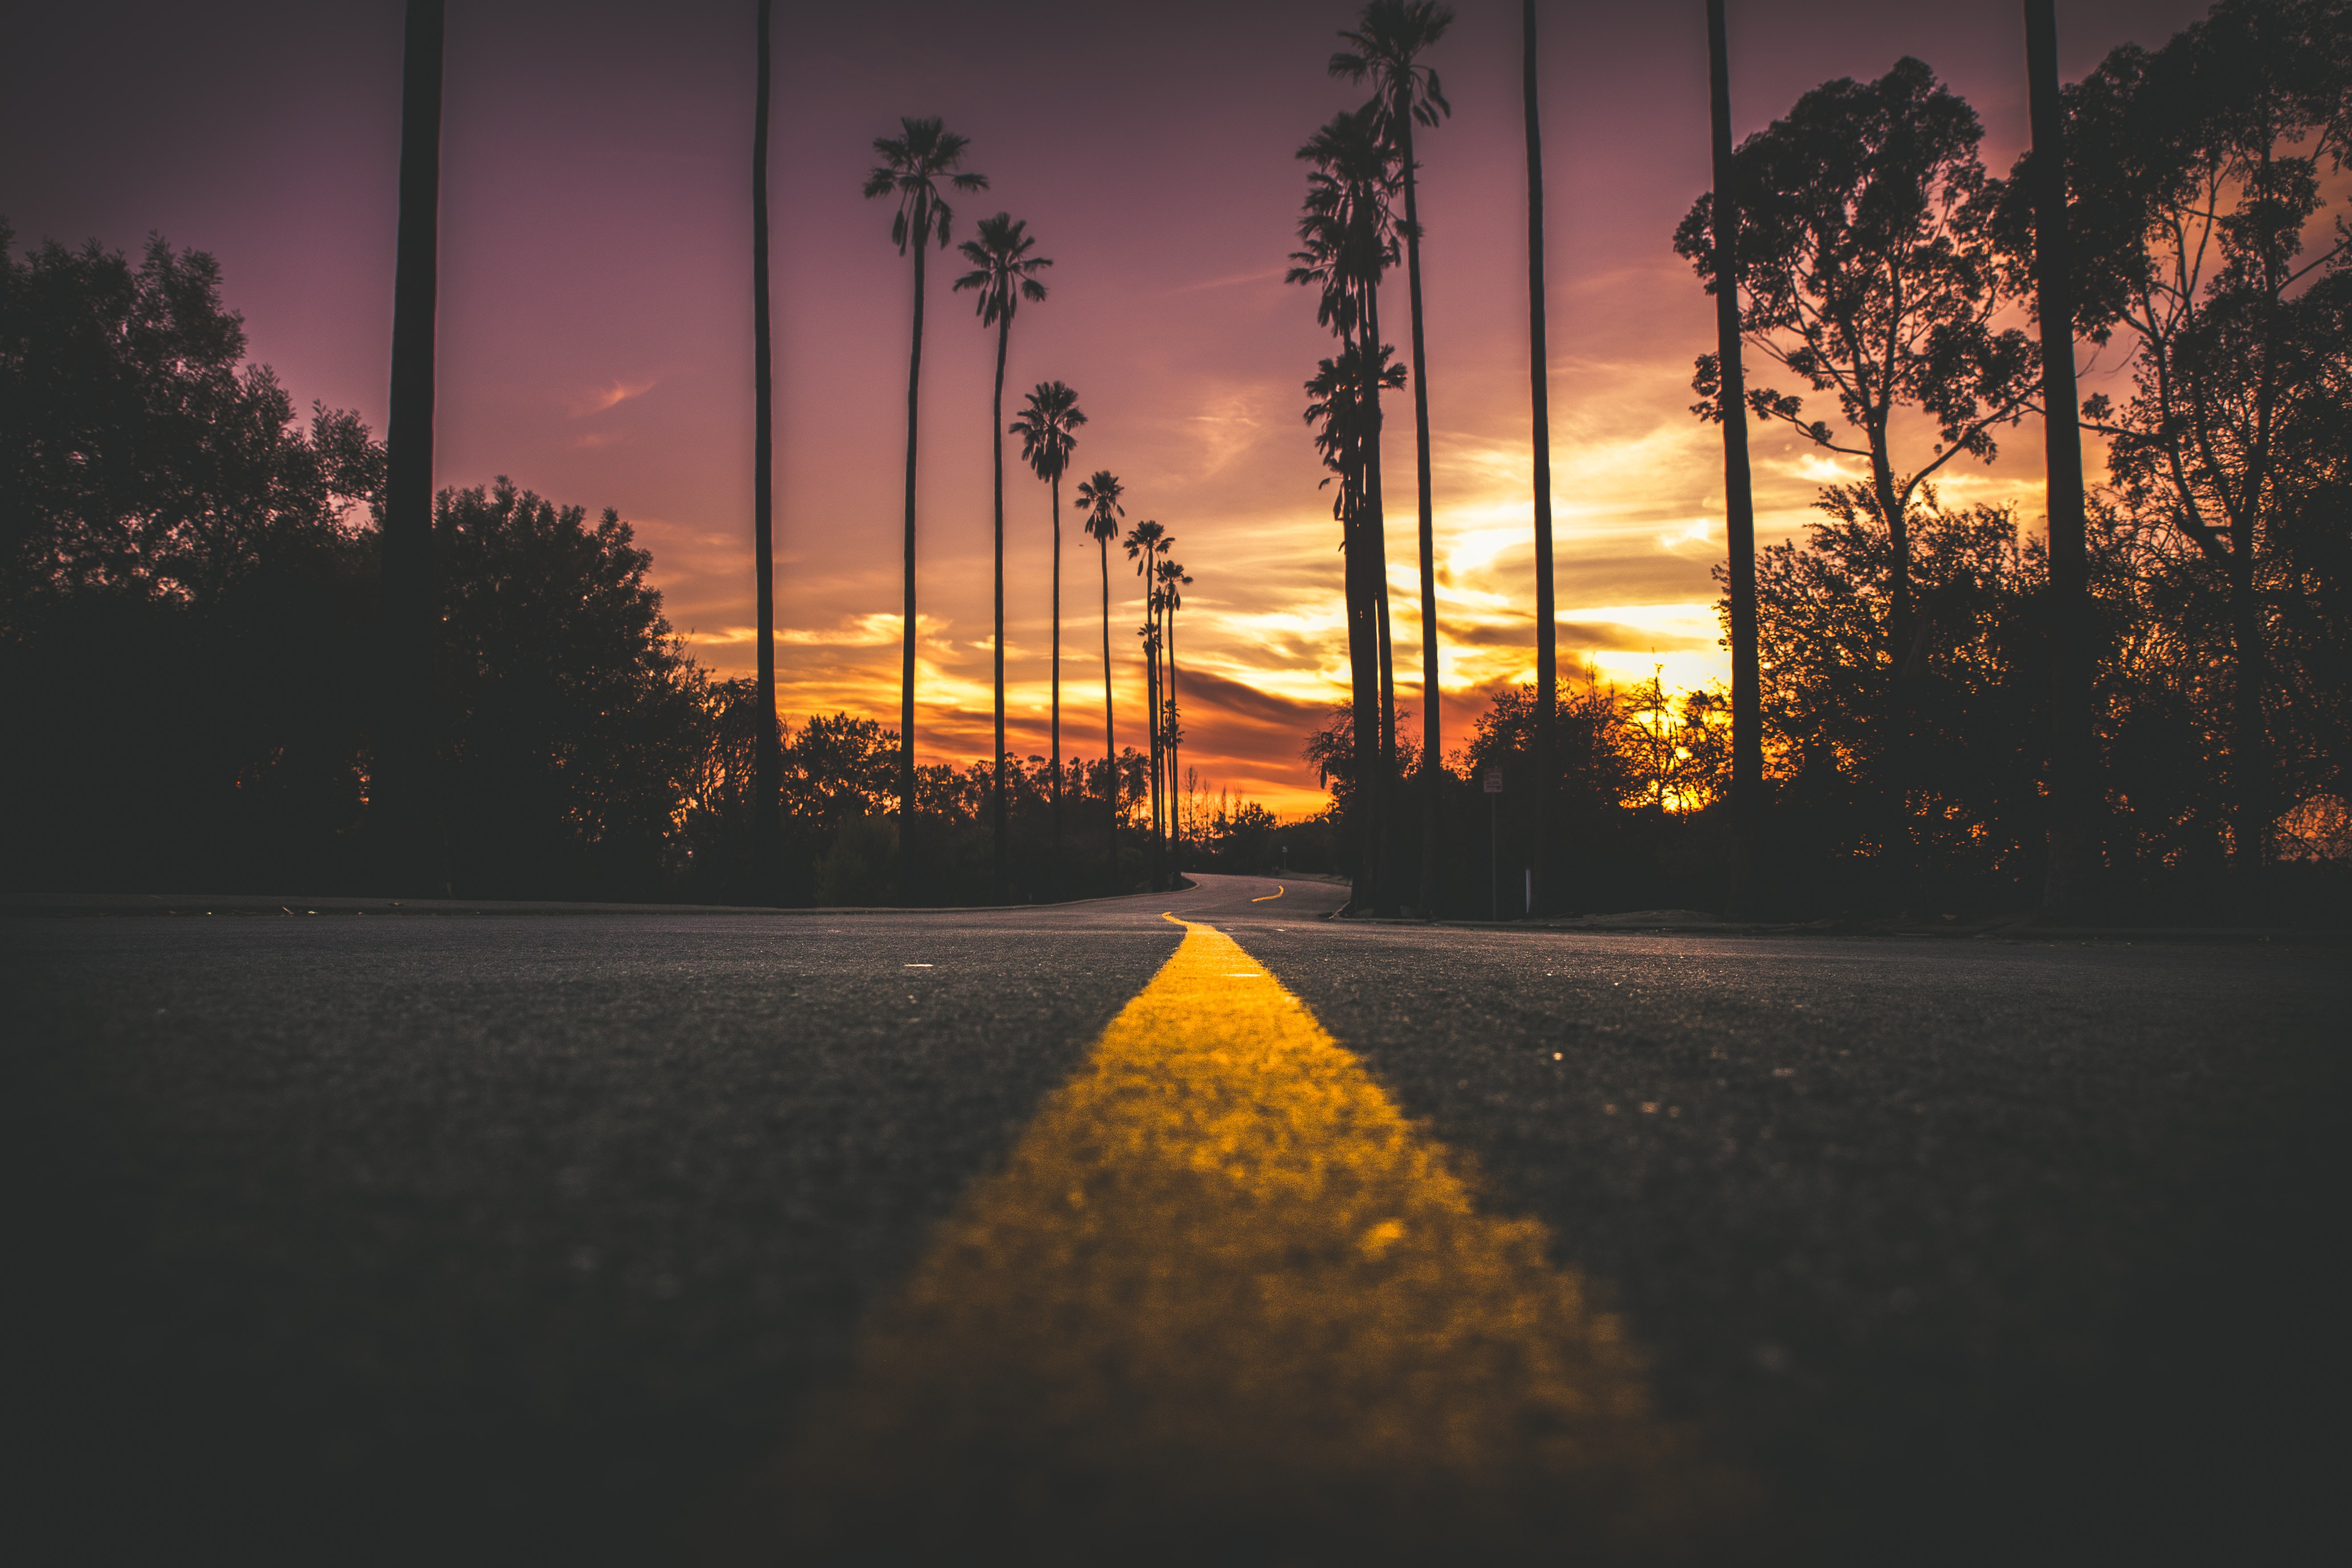 General 5279x3519 landscape nature road sunset palm trees asphalt silhouette orange sky